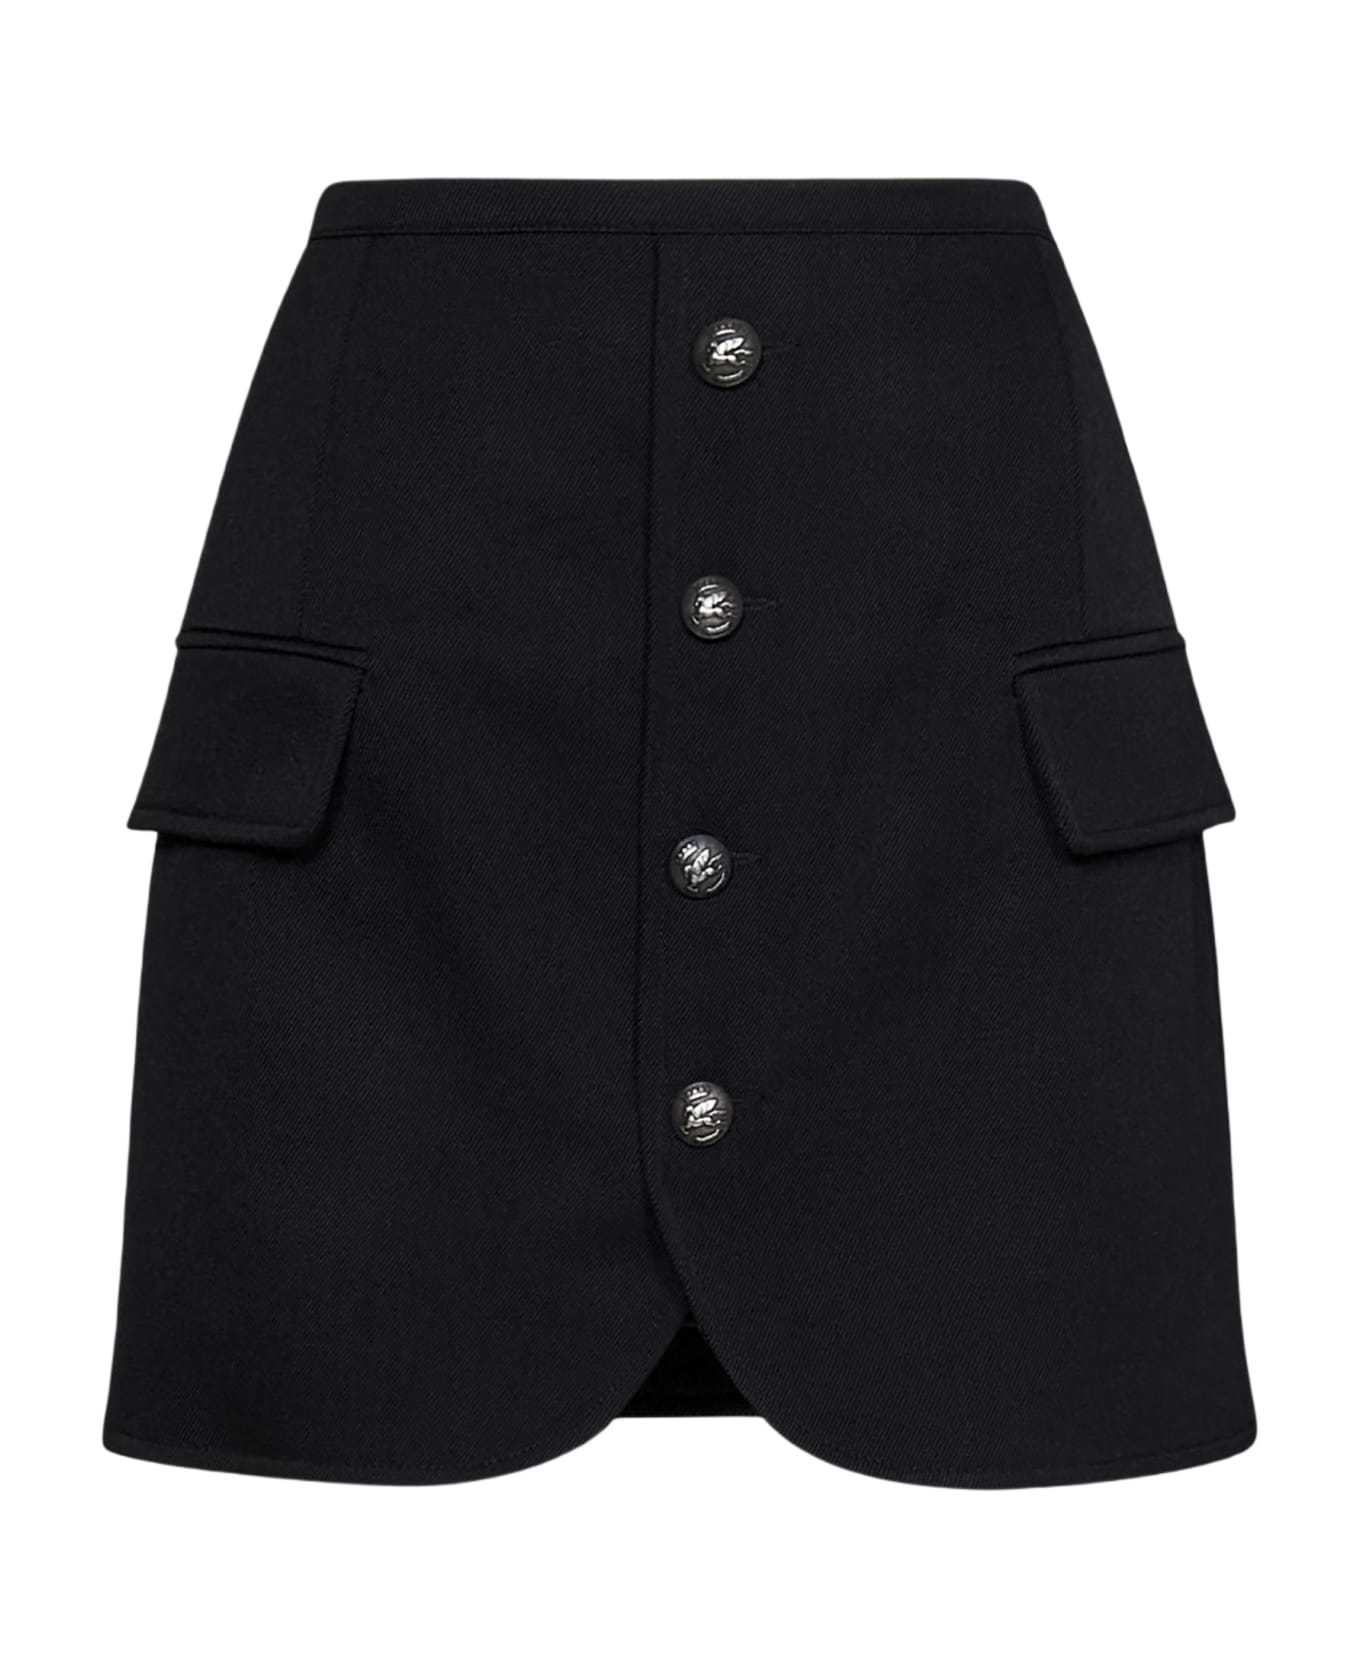 Etro Mini Skirt - Nero